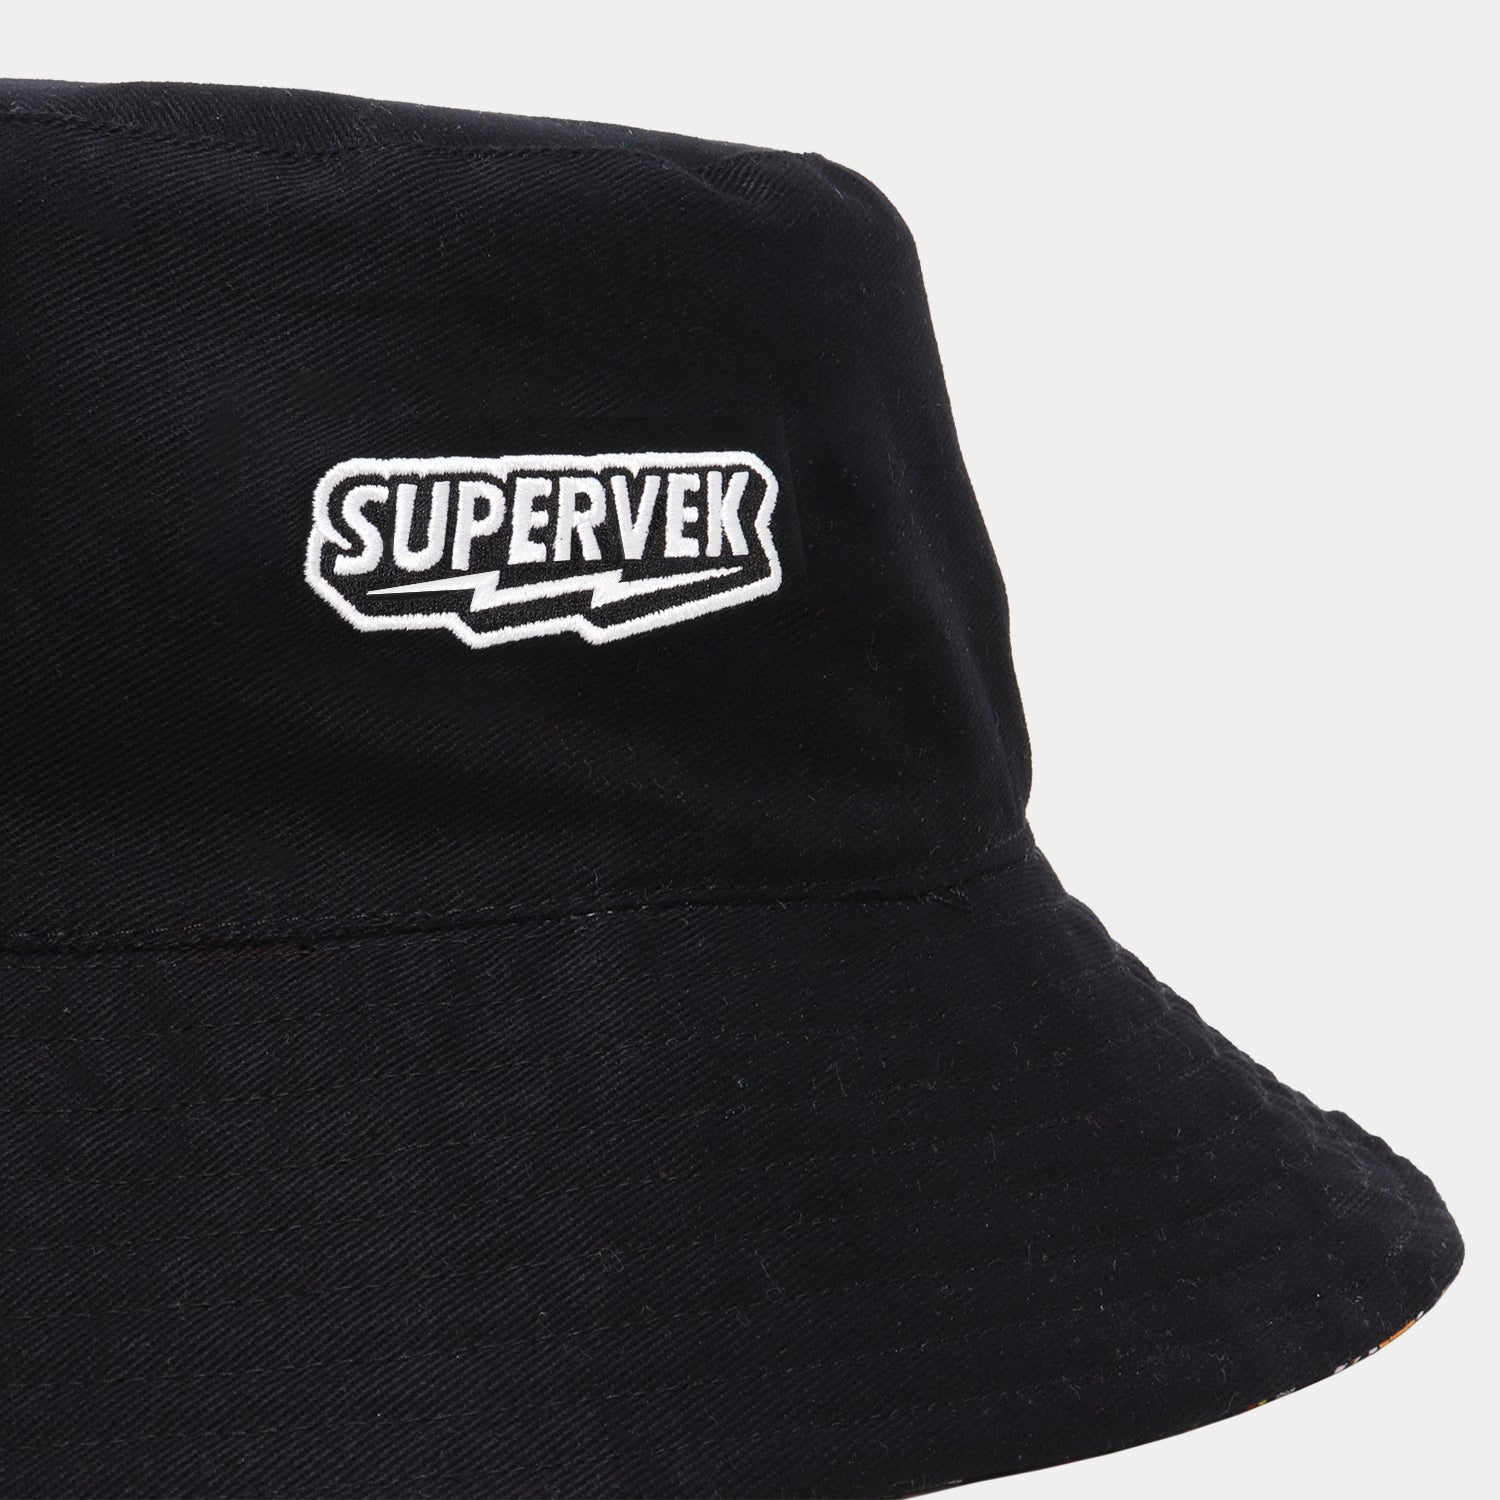 Classic Bucket Hat by Supervek | Streetwear | Men & Women | Hiphop Cap